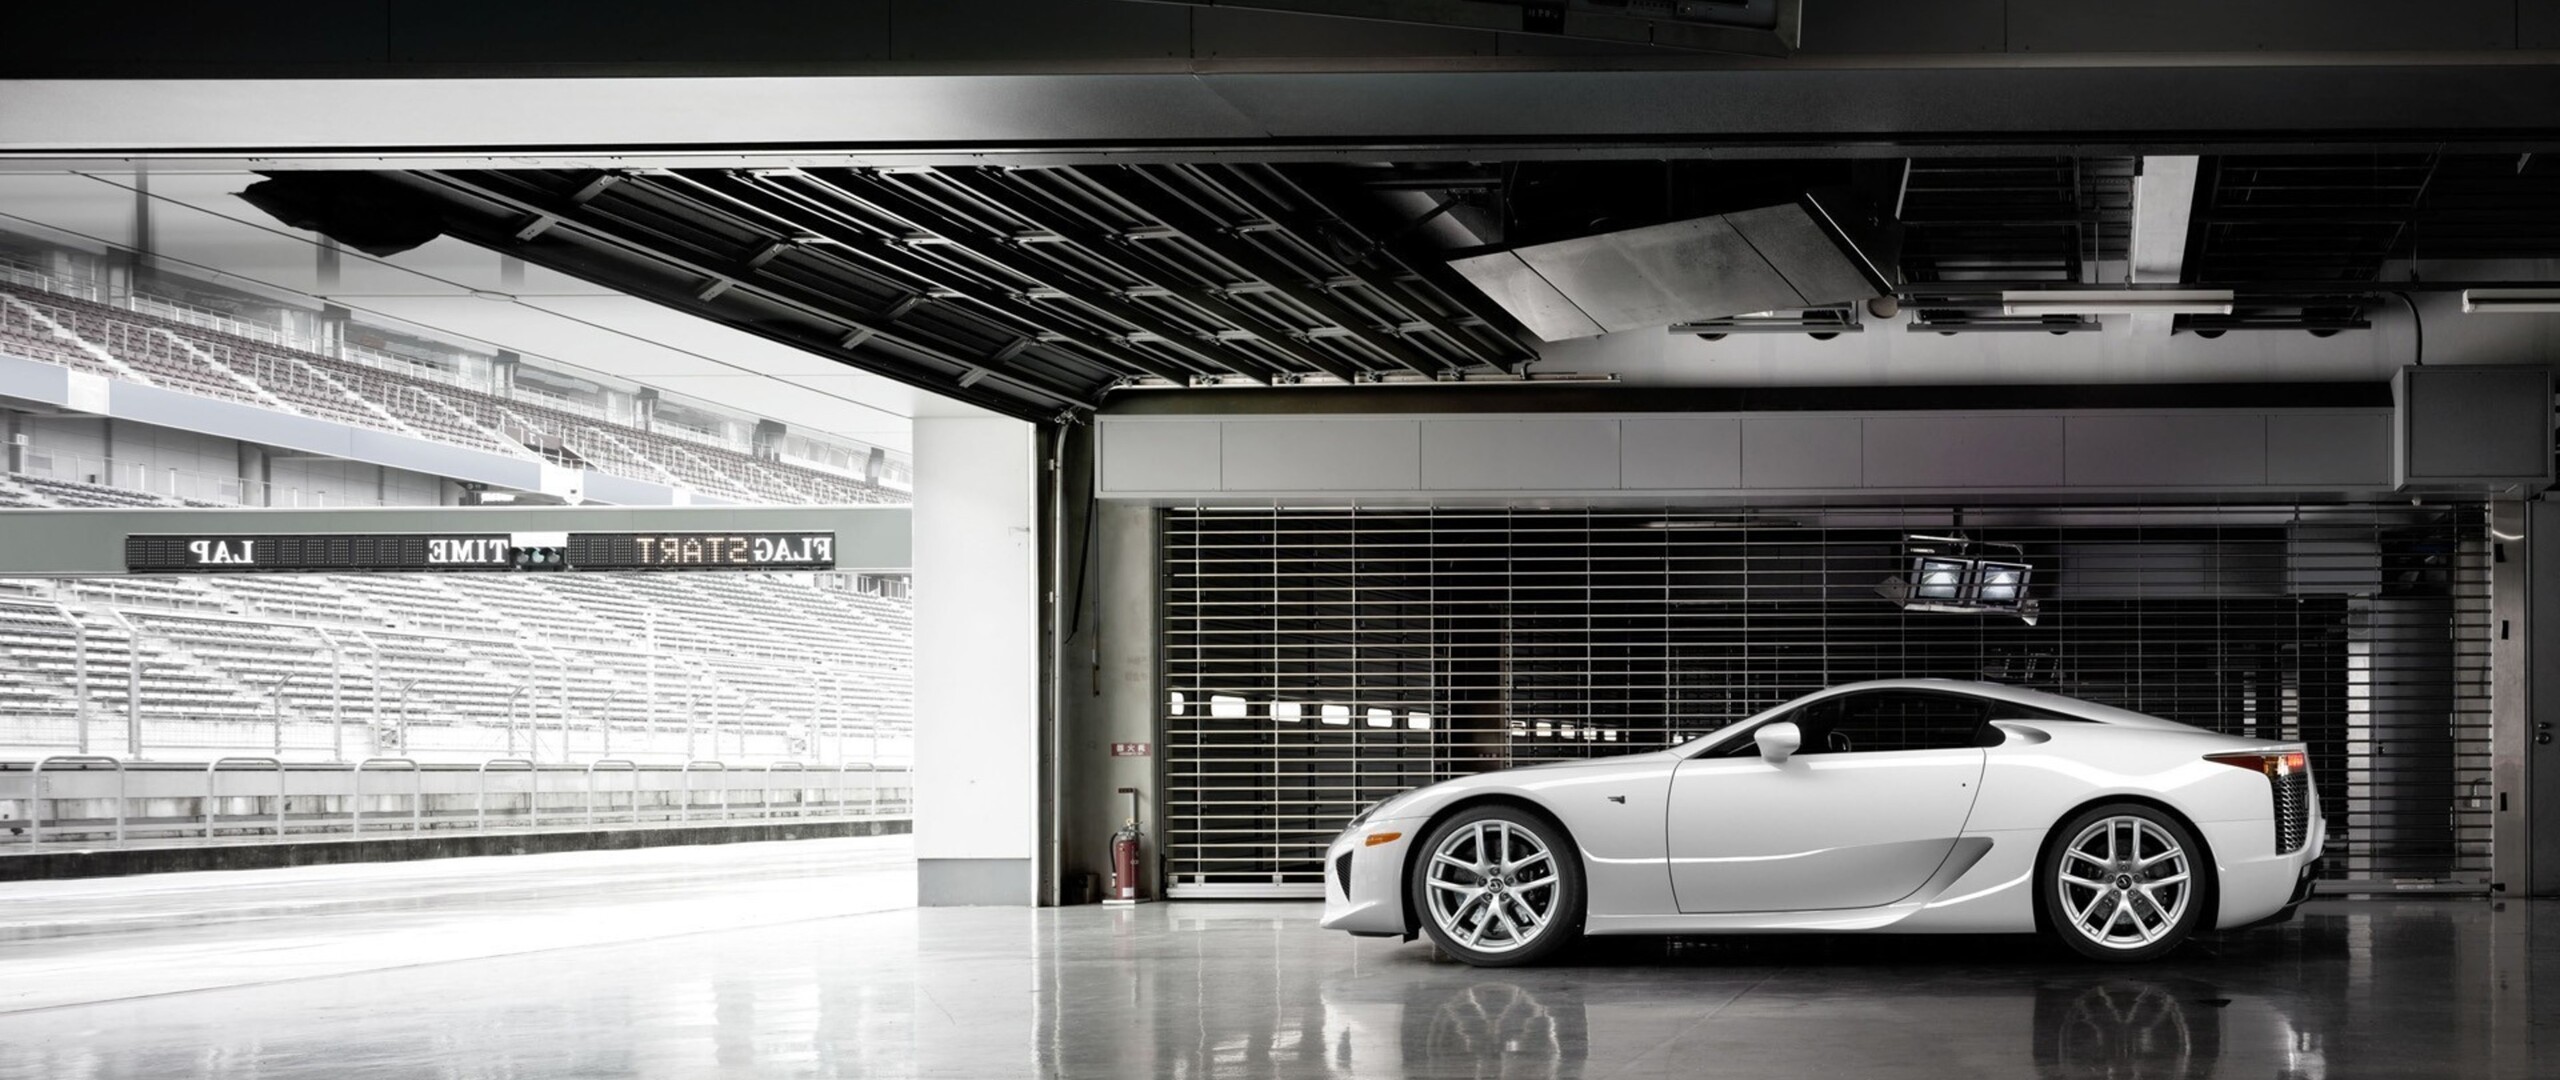 Lexus Lfa Wallpapers